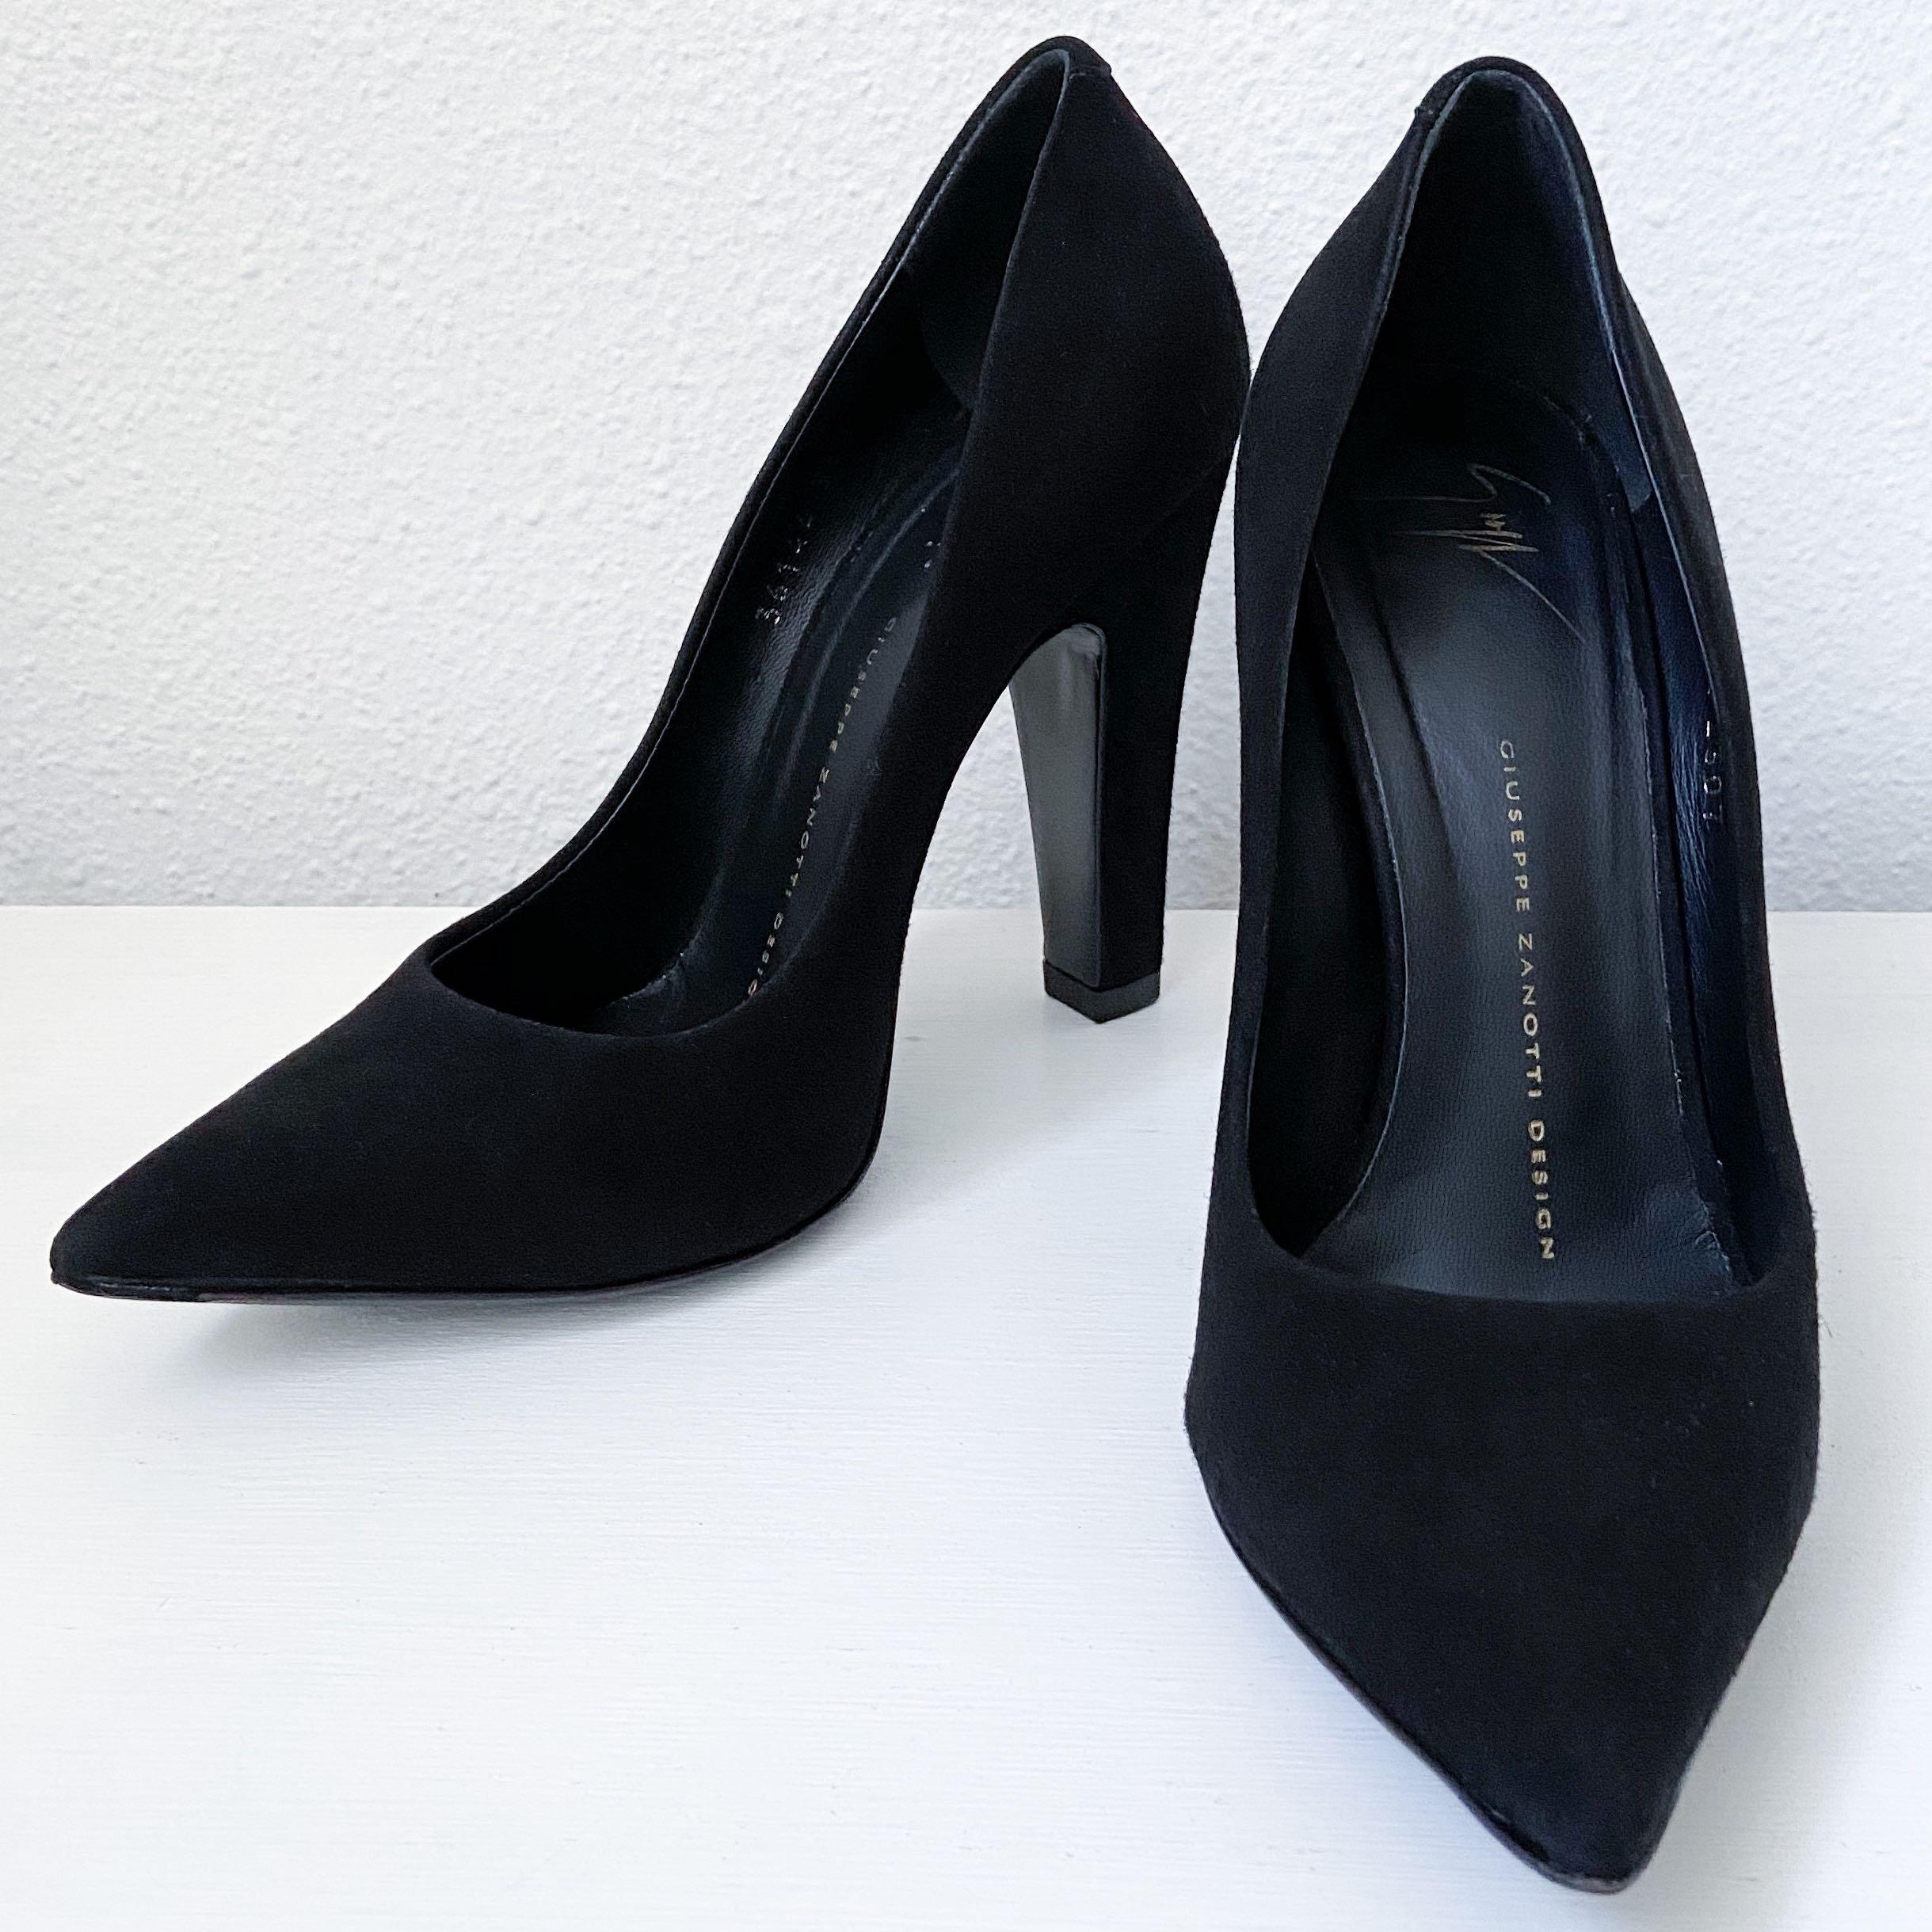 authentic black suede heels pumps 